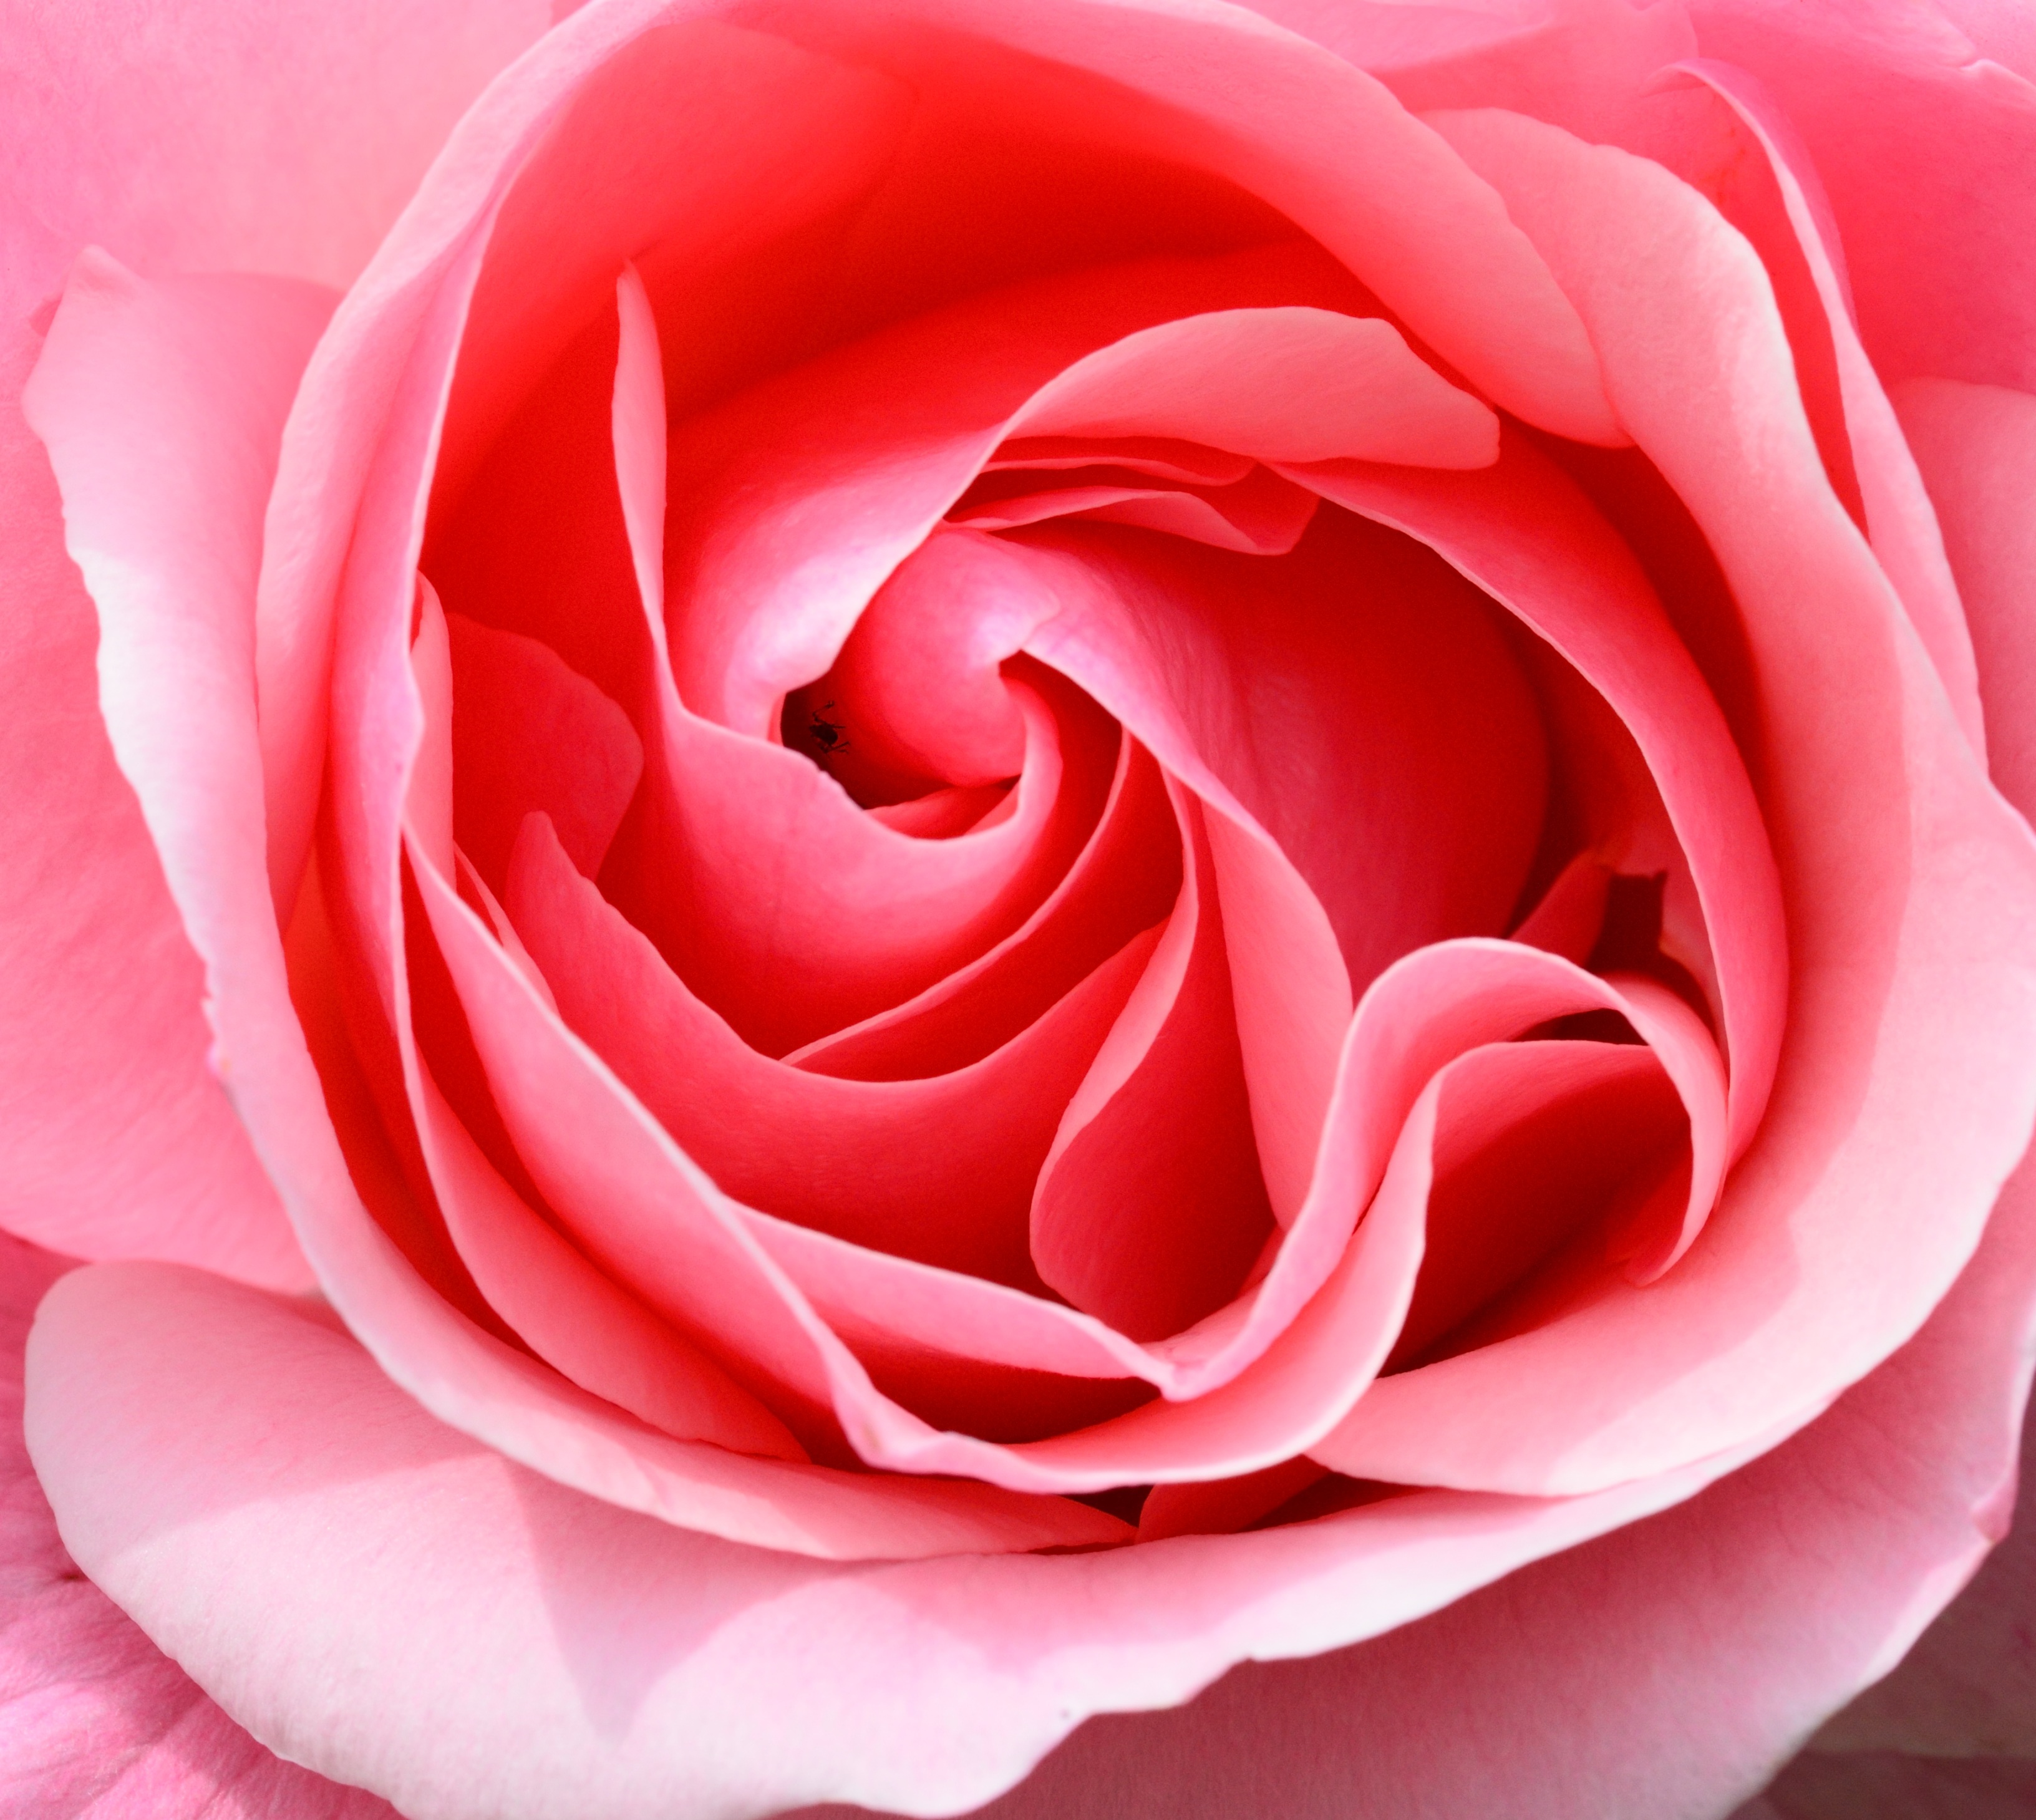 Free photo A close-up of a pink rosebud